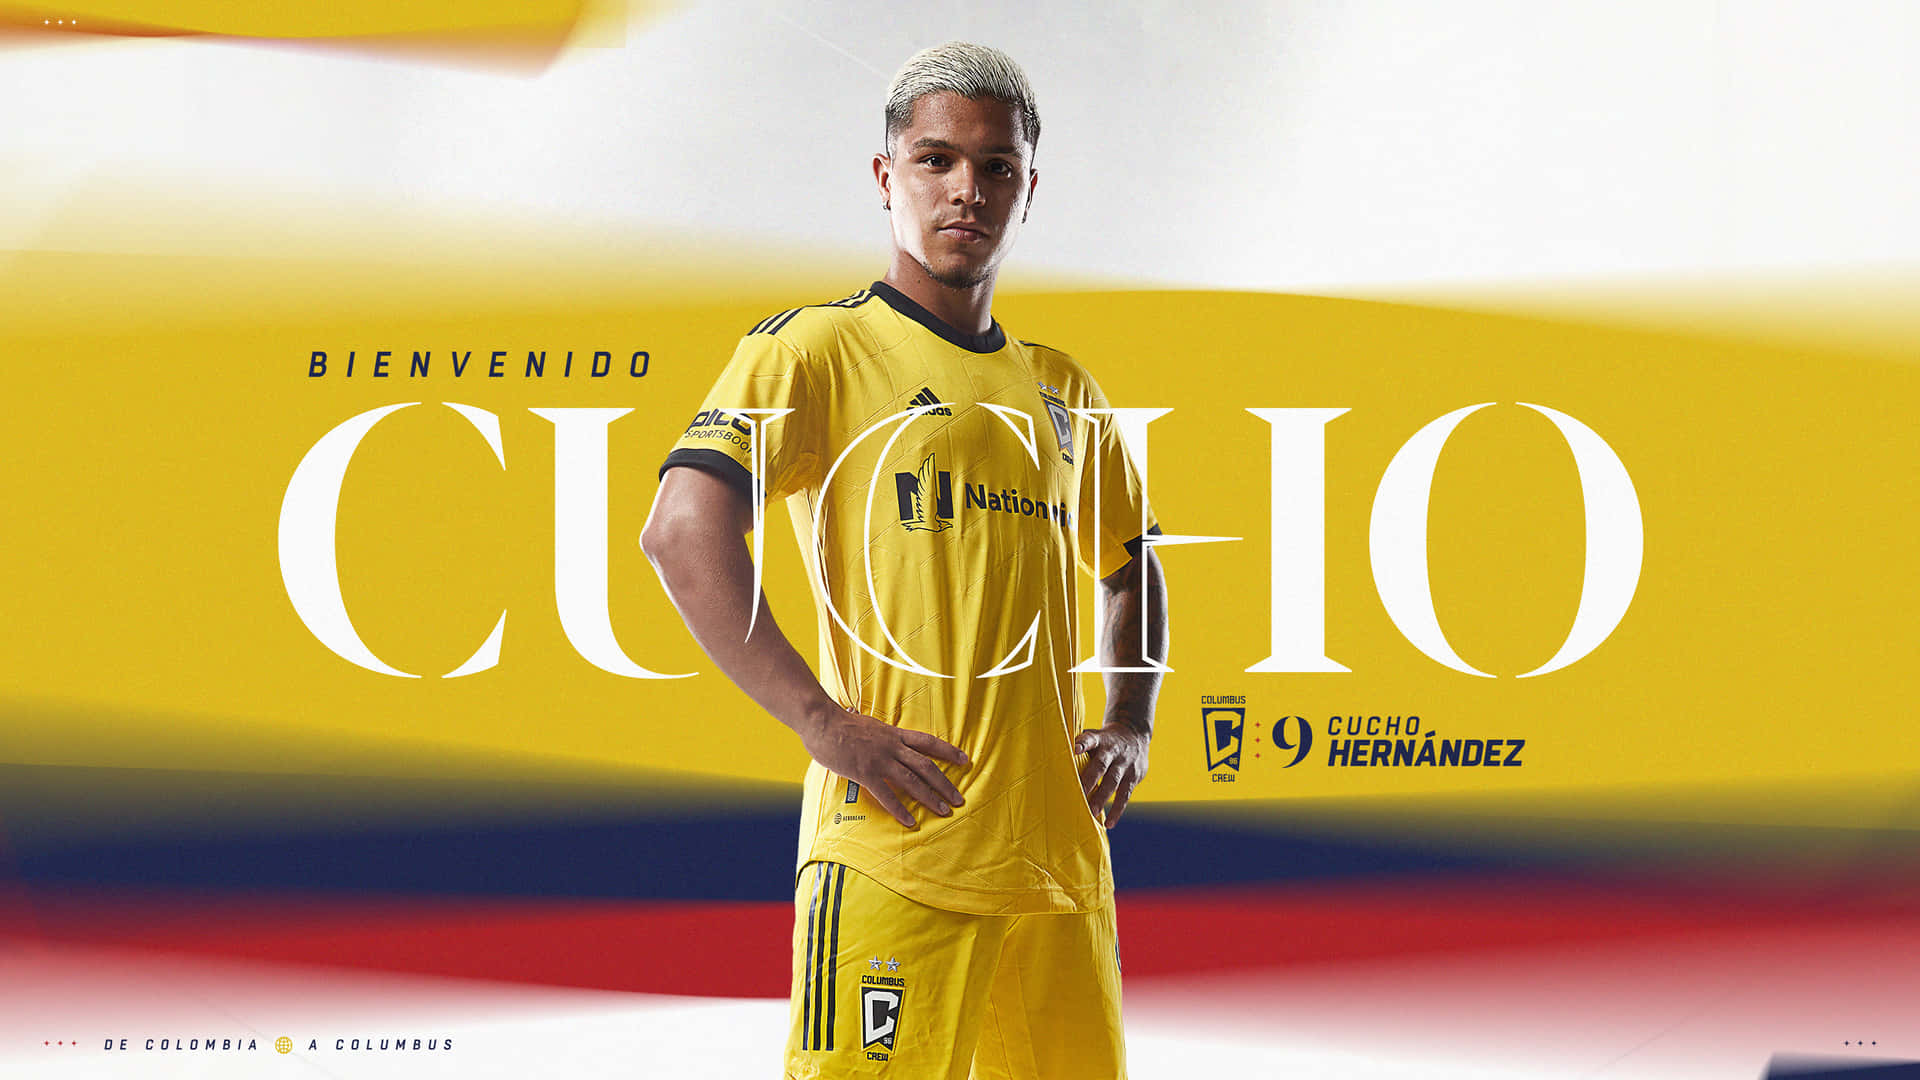 Cucho Hernandez Football Striker And Winger Wallpaper